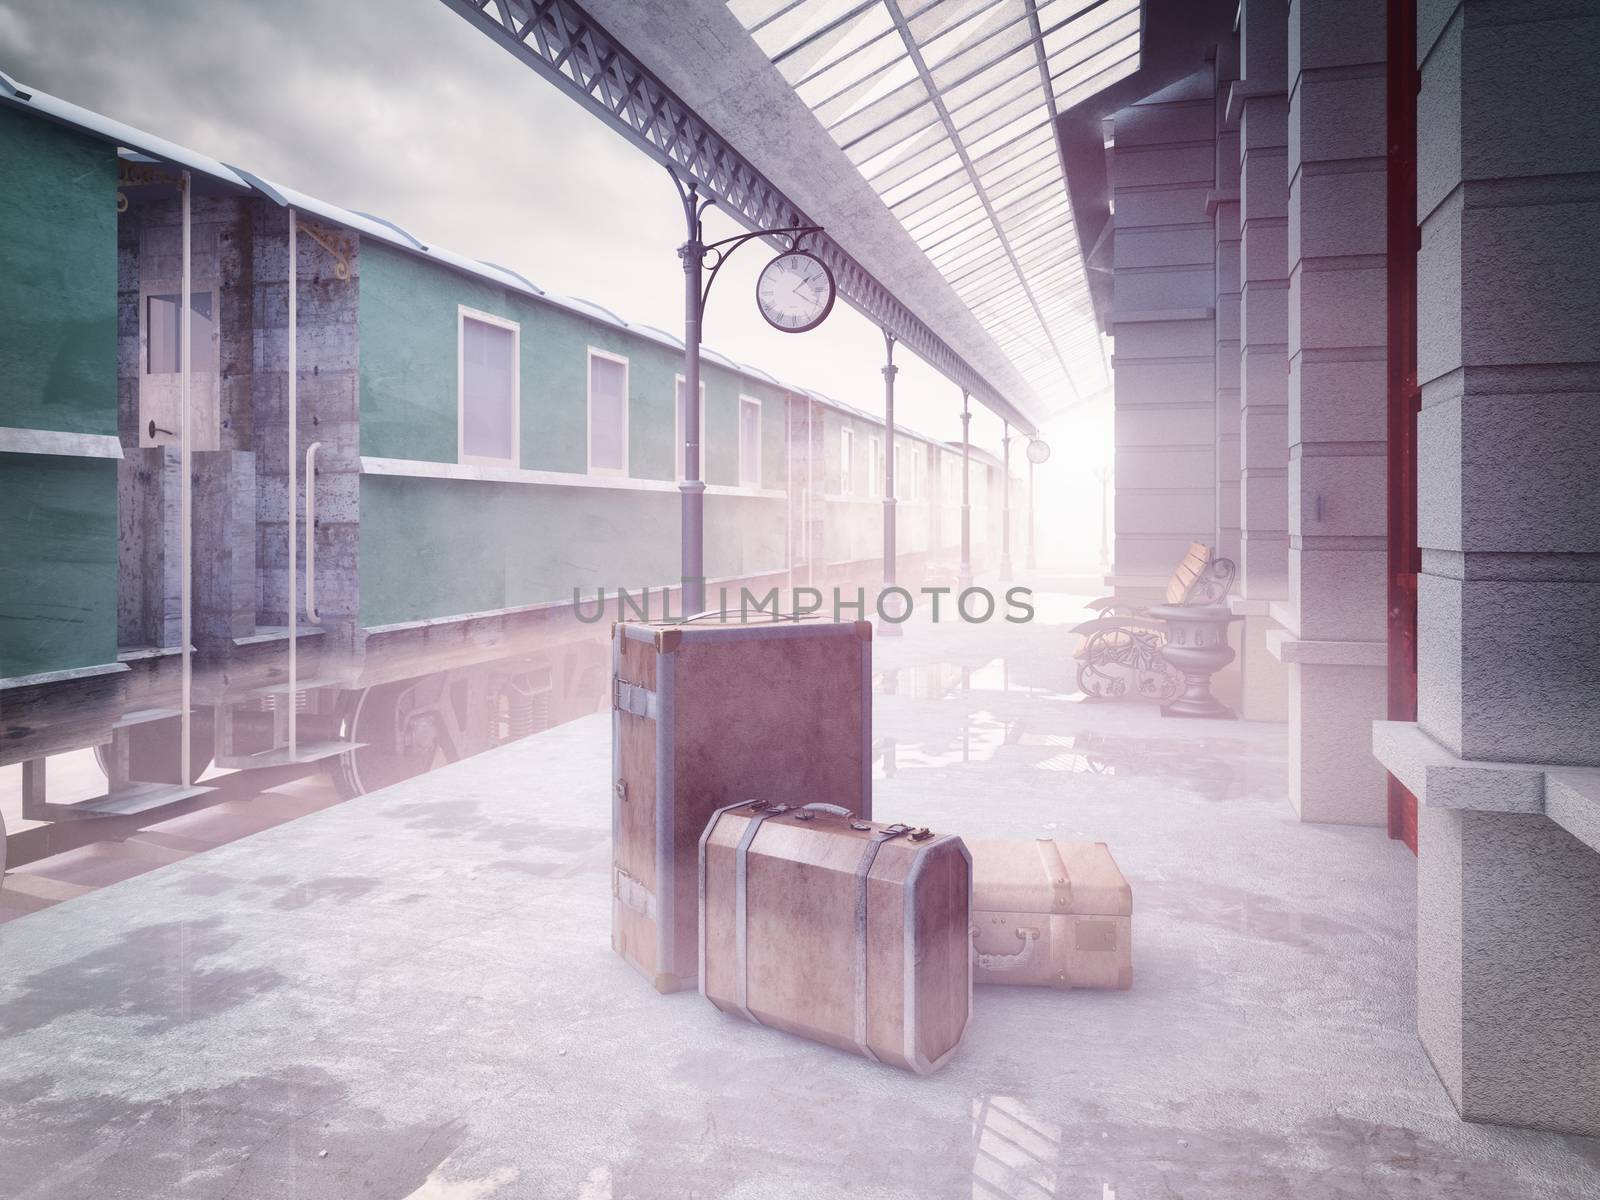  retro railway  train station by vicnt